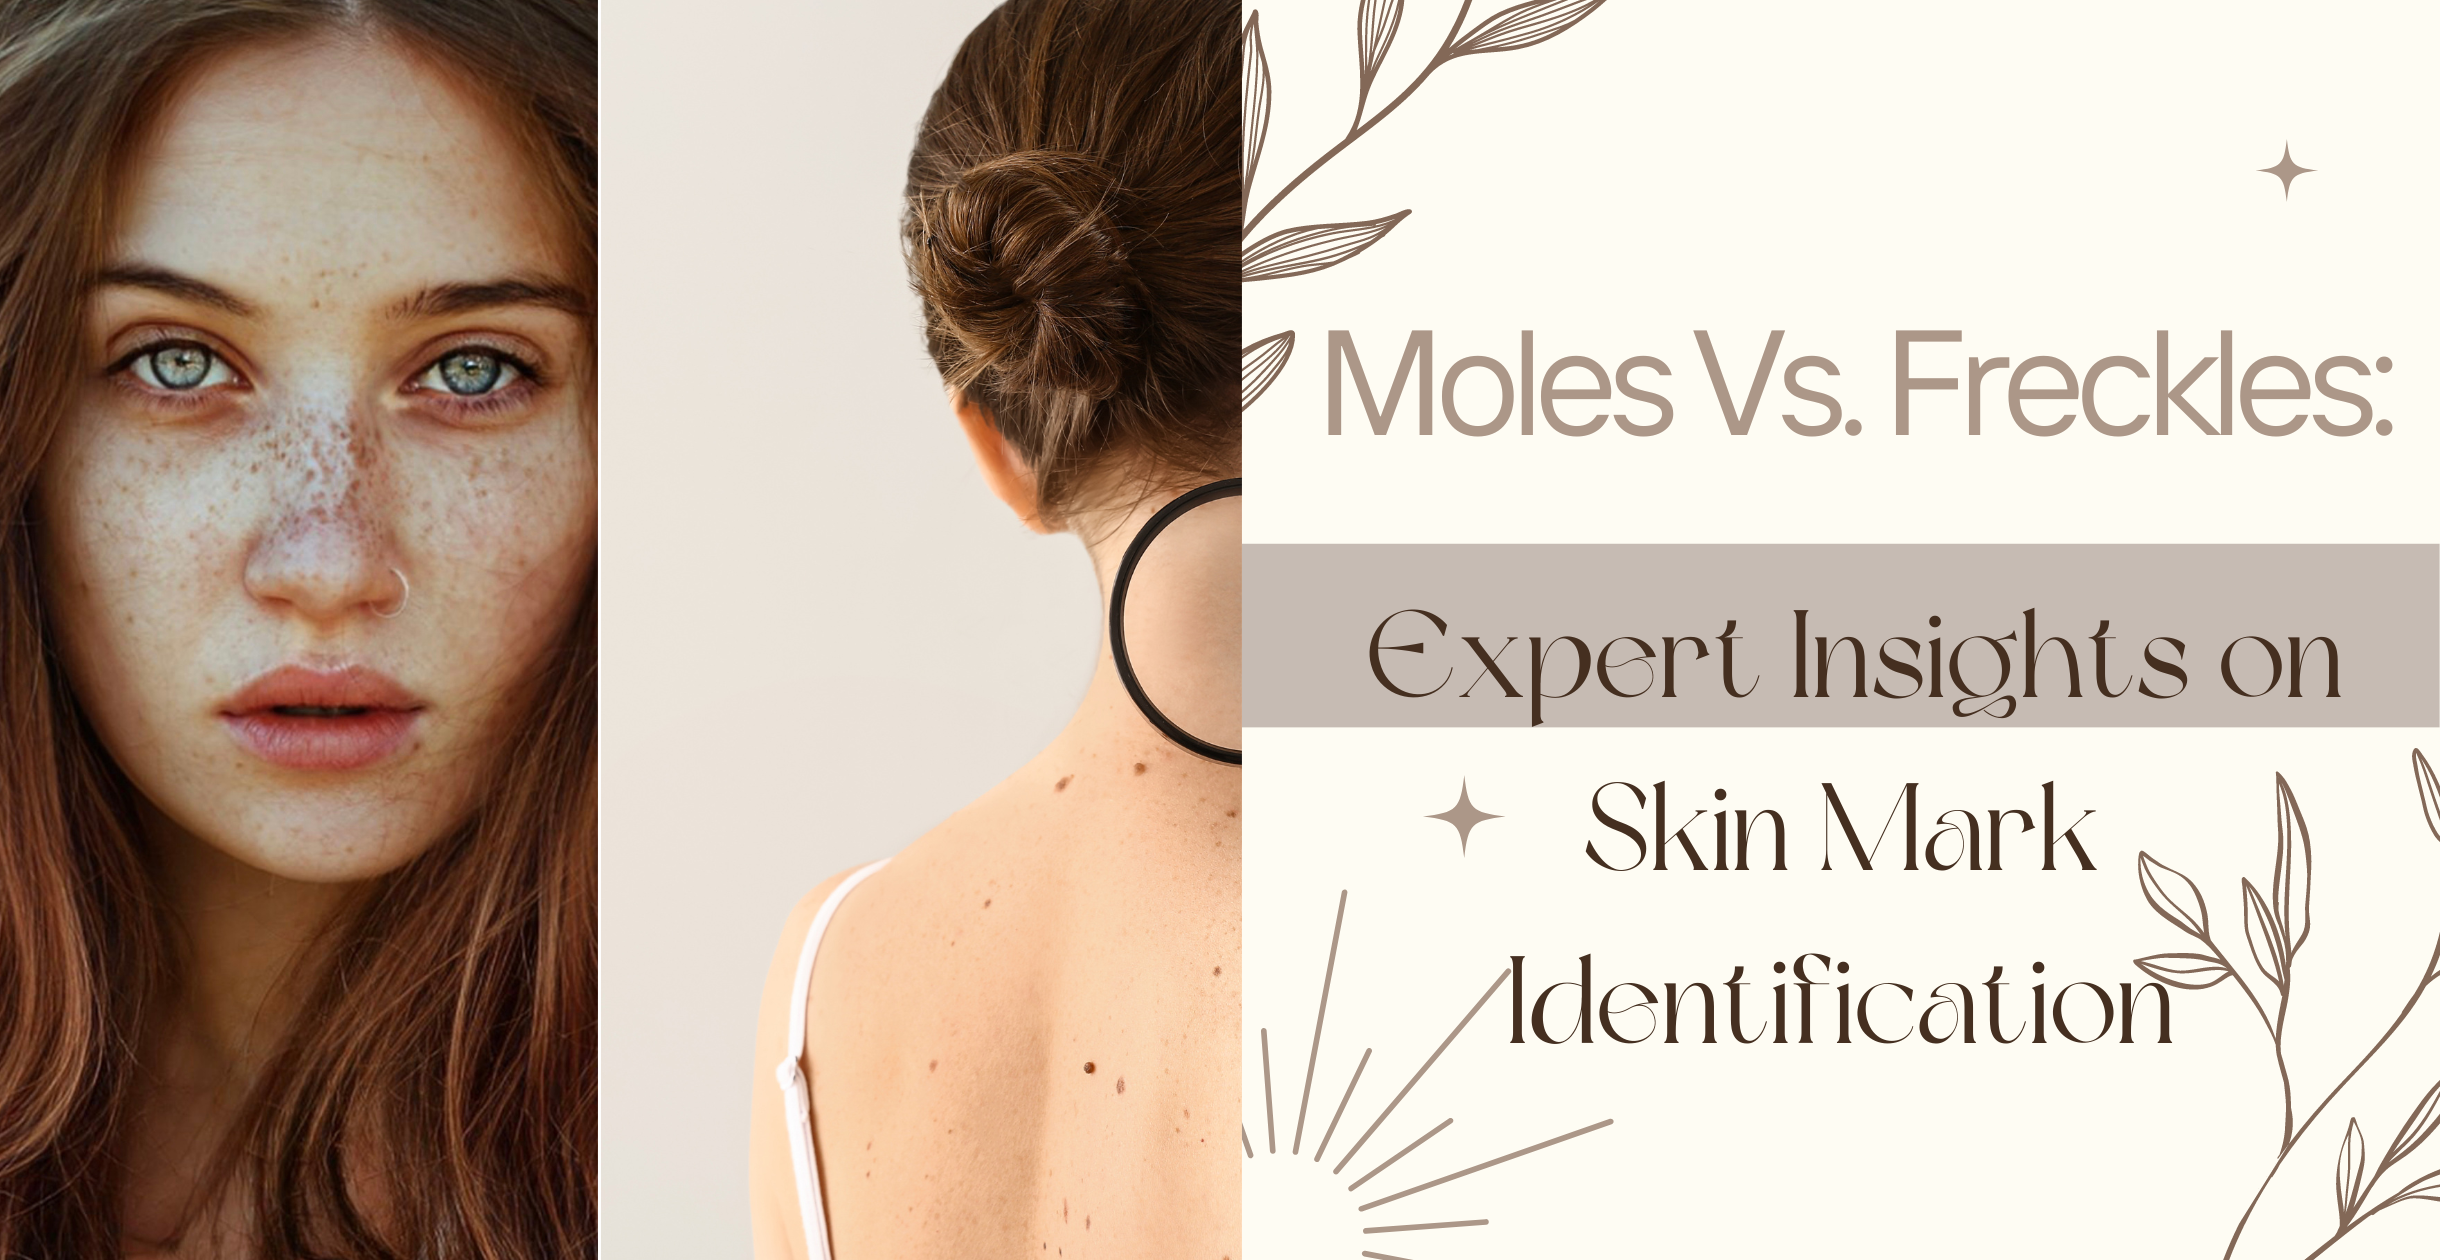 Moles Vs. Freckles: Expert Insights on Skin Mark Identification